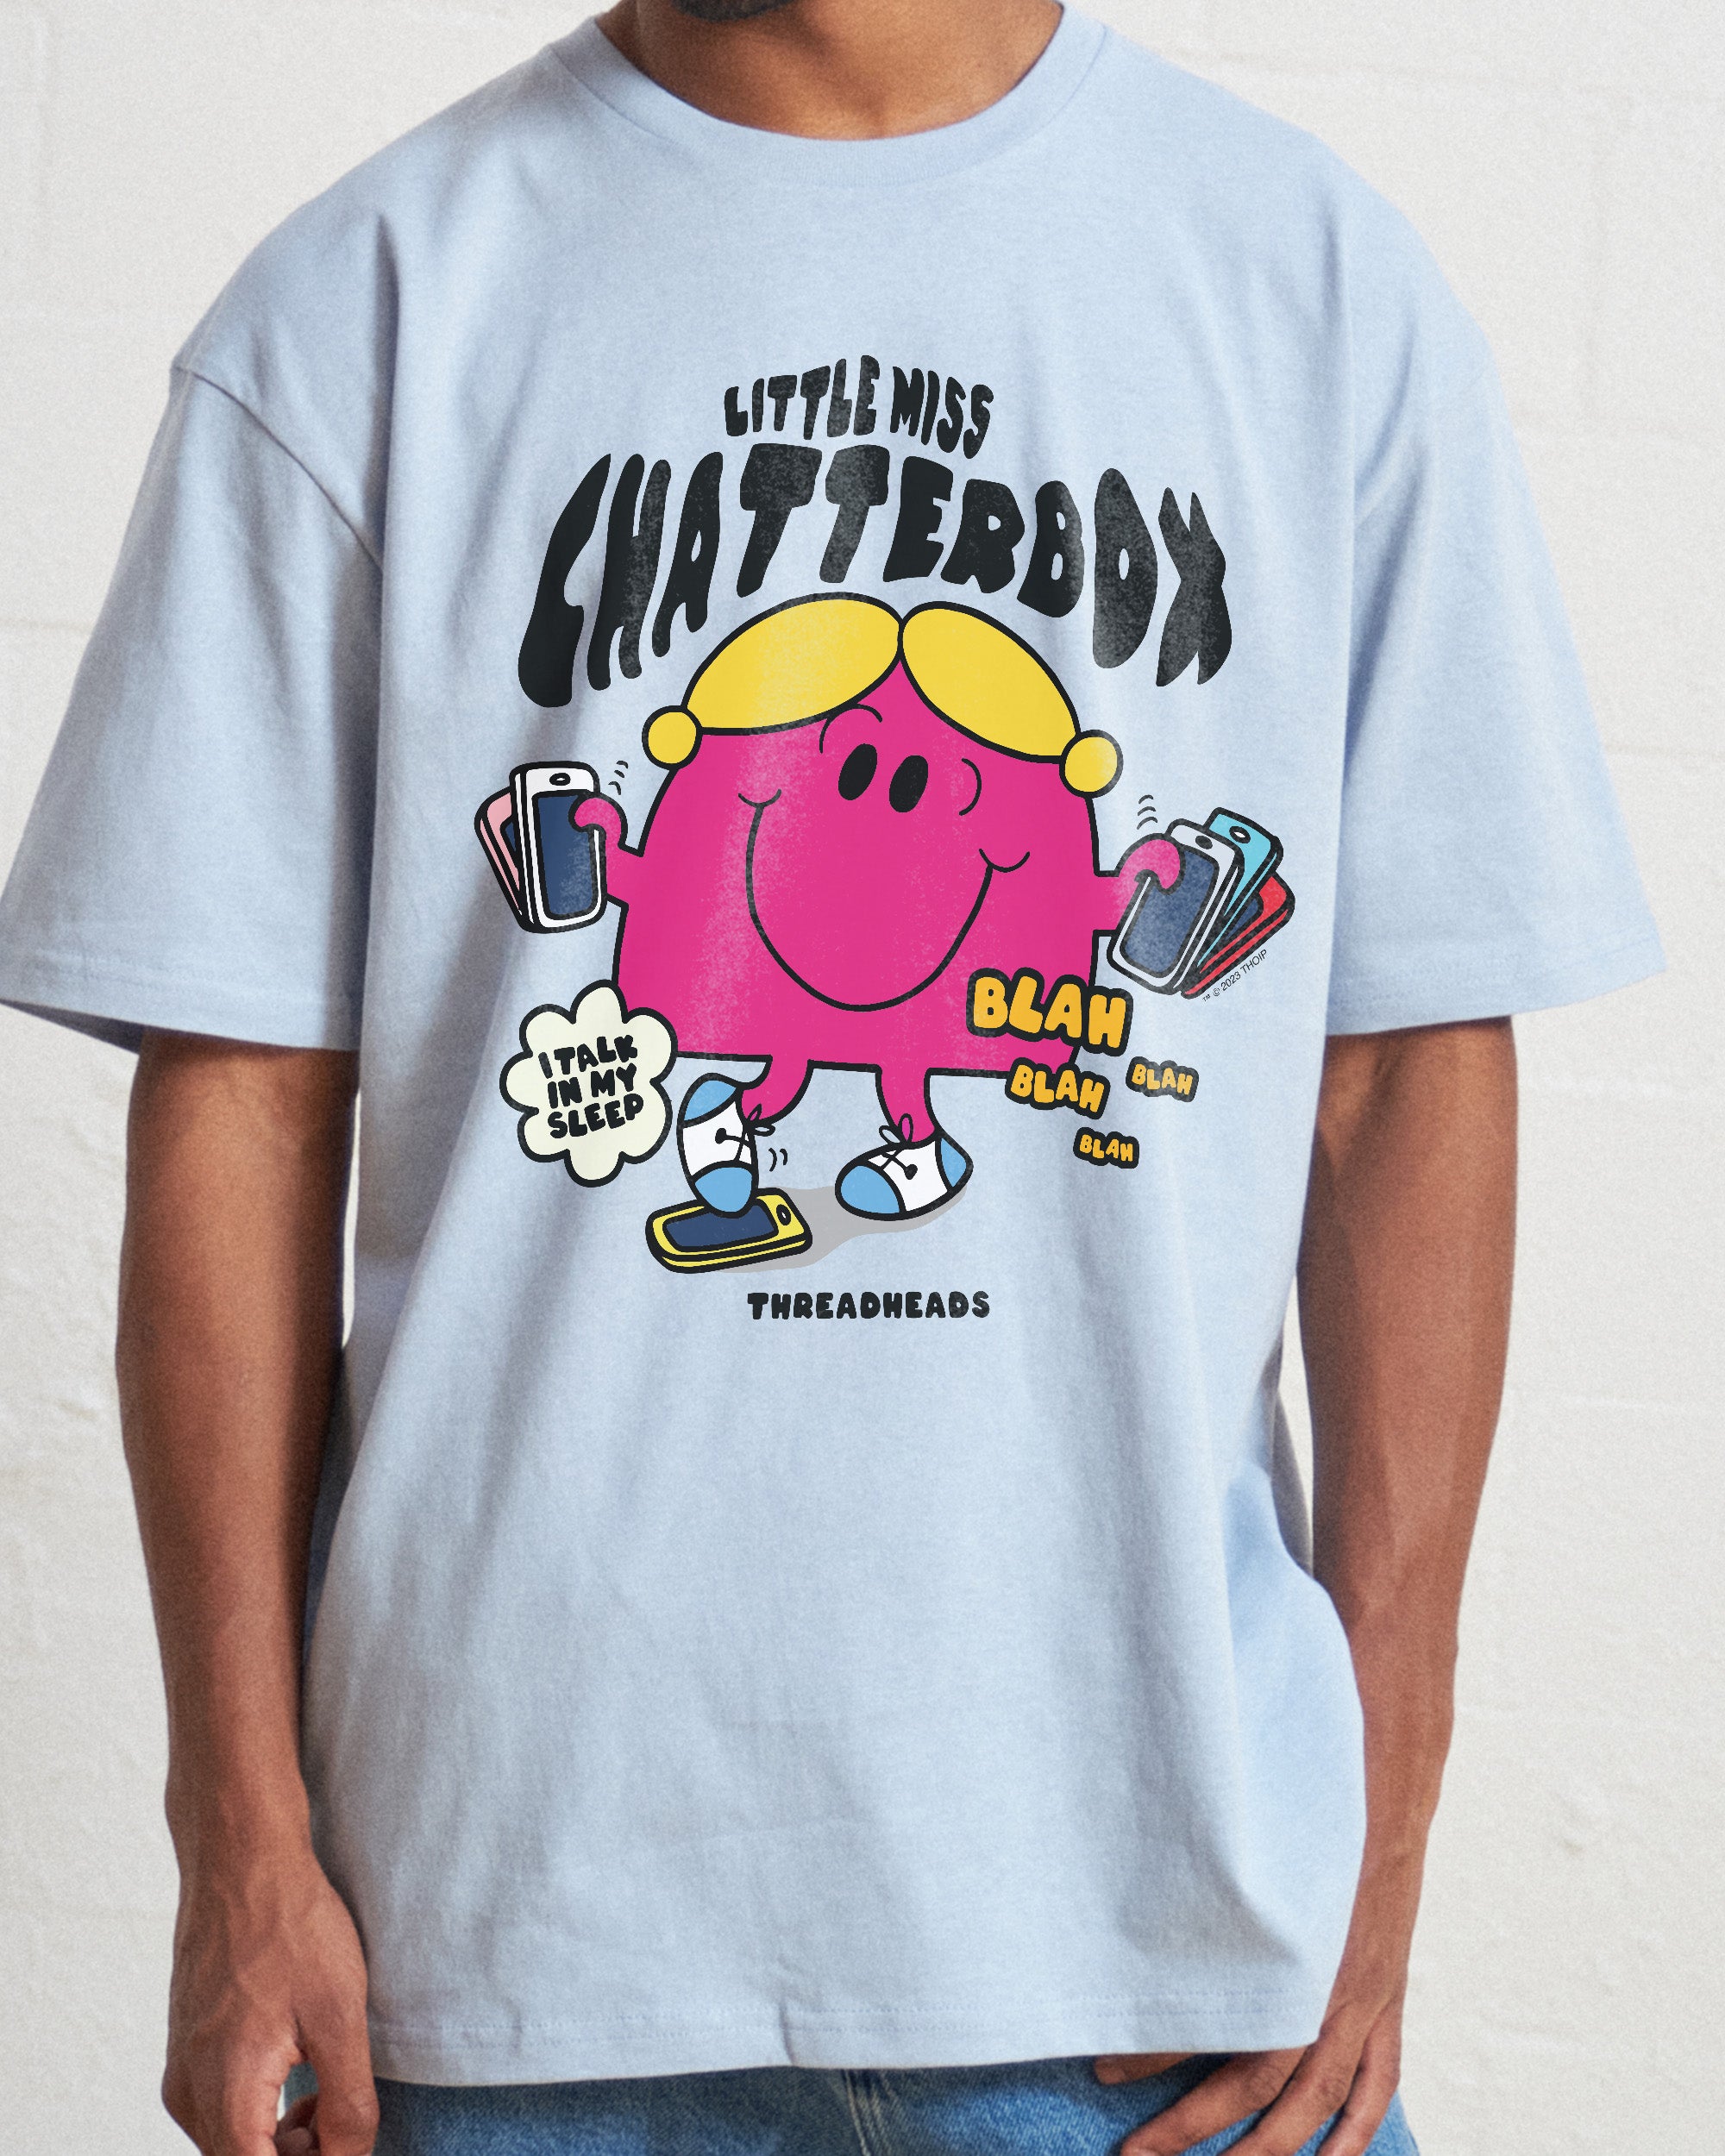 Little Miss Chatterbox T-Shirt